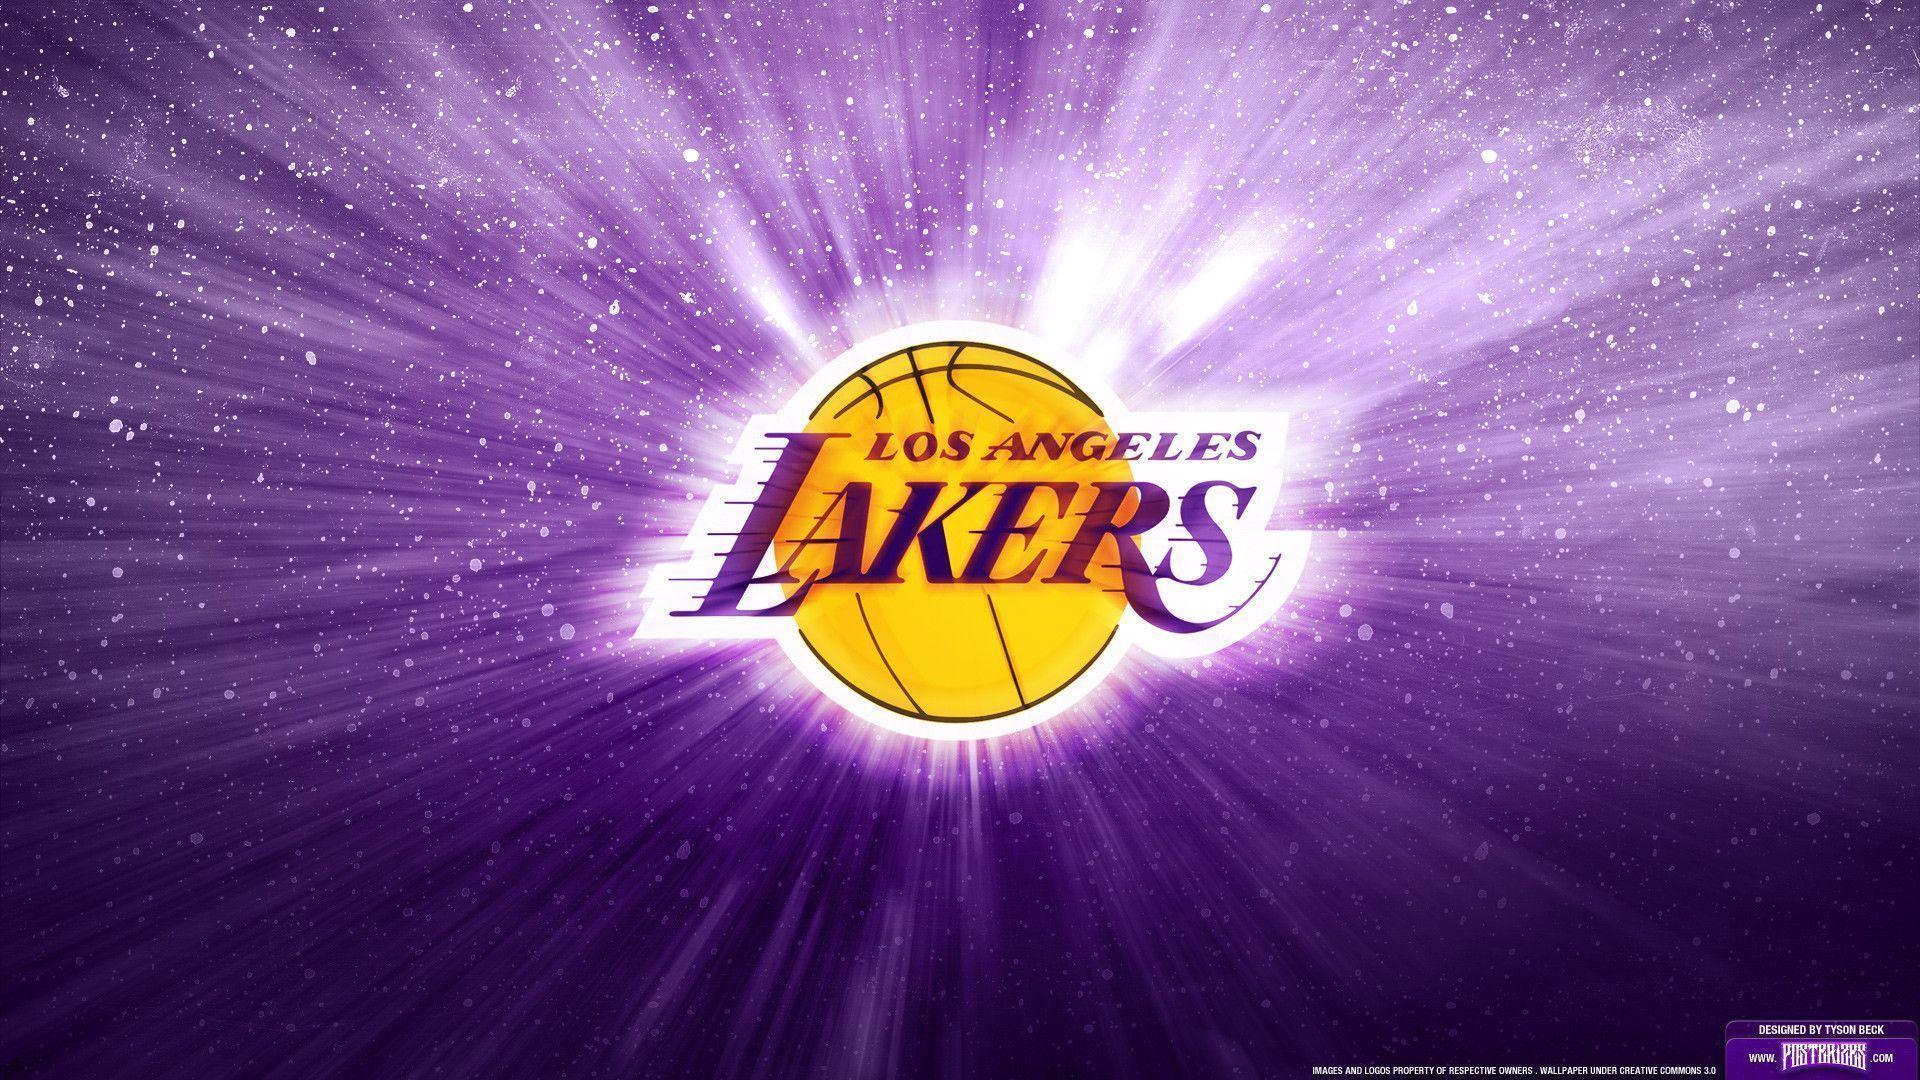 Los Angeles Lakers Logo Wallpaper. Posterizes. NBA Wallpaper